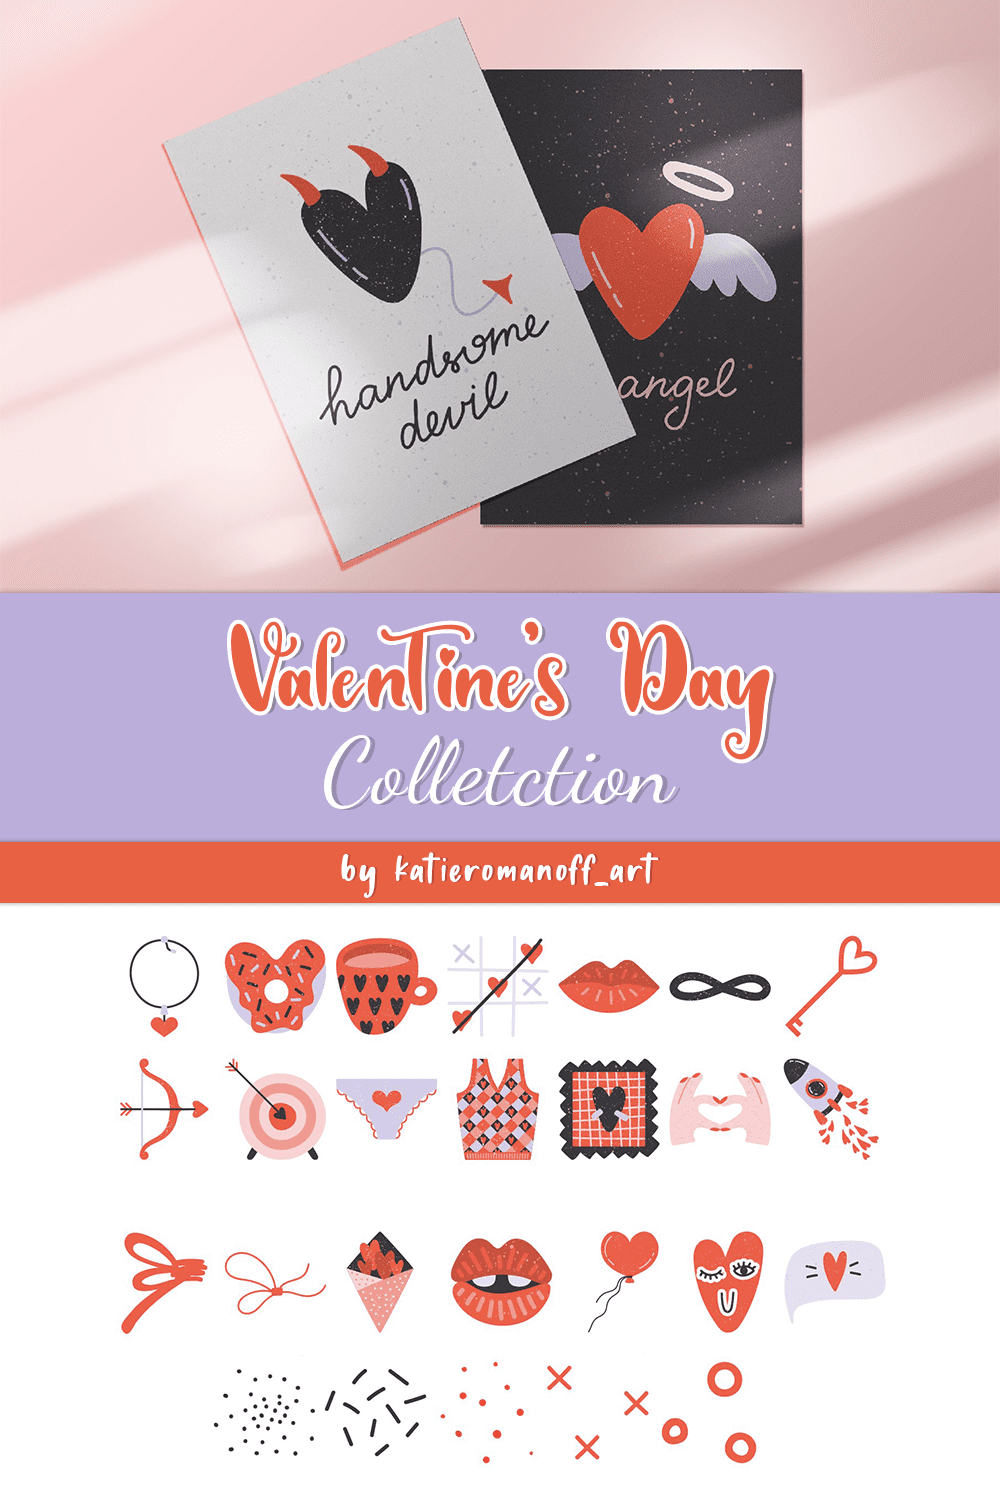 Valentine's Day Collection - Pinterest.